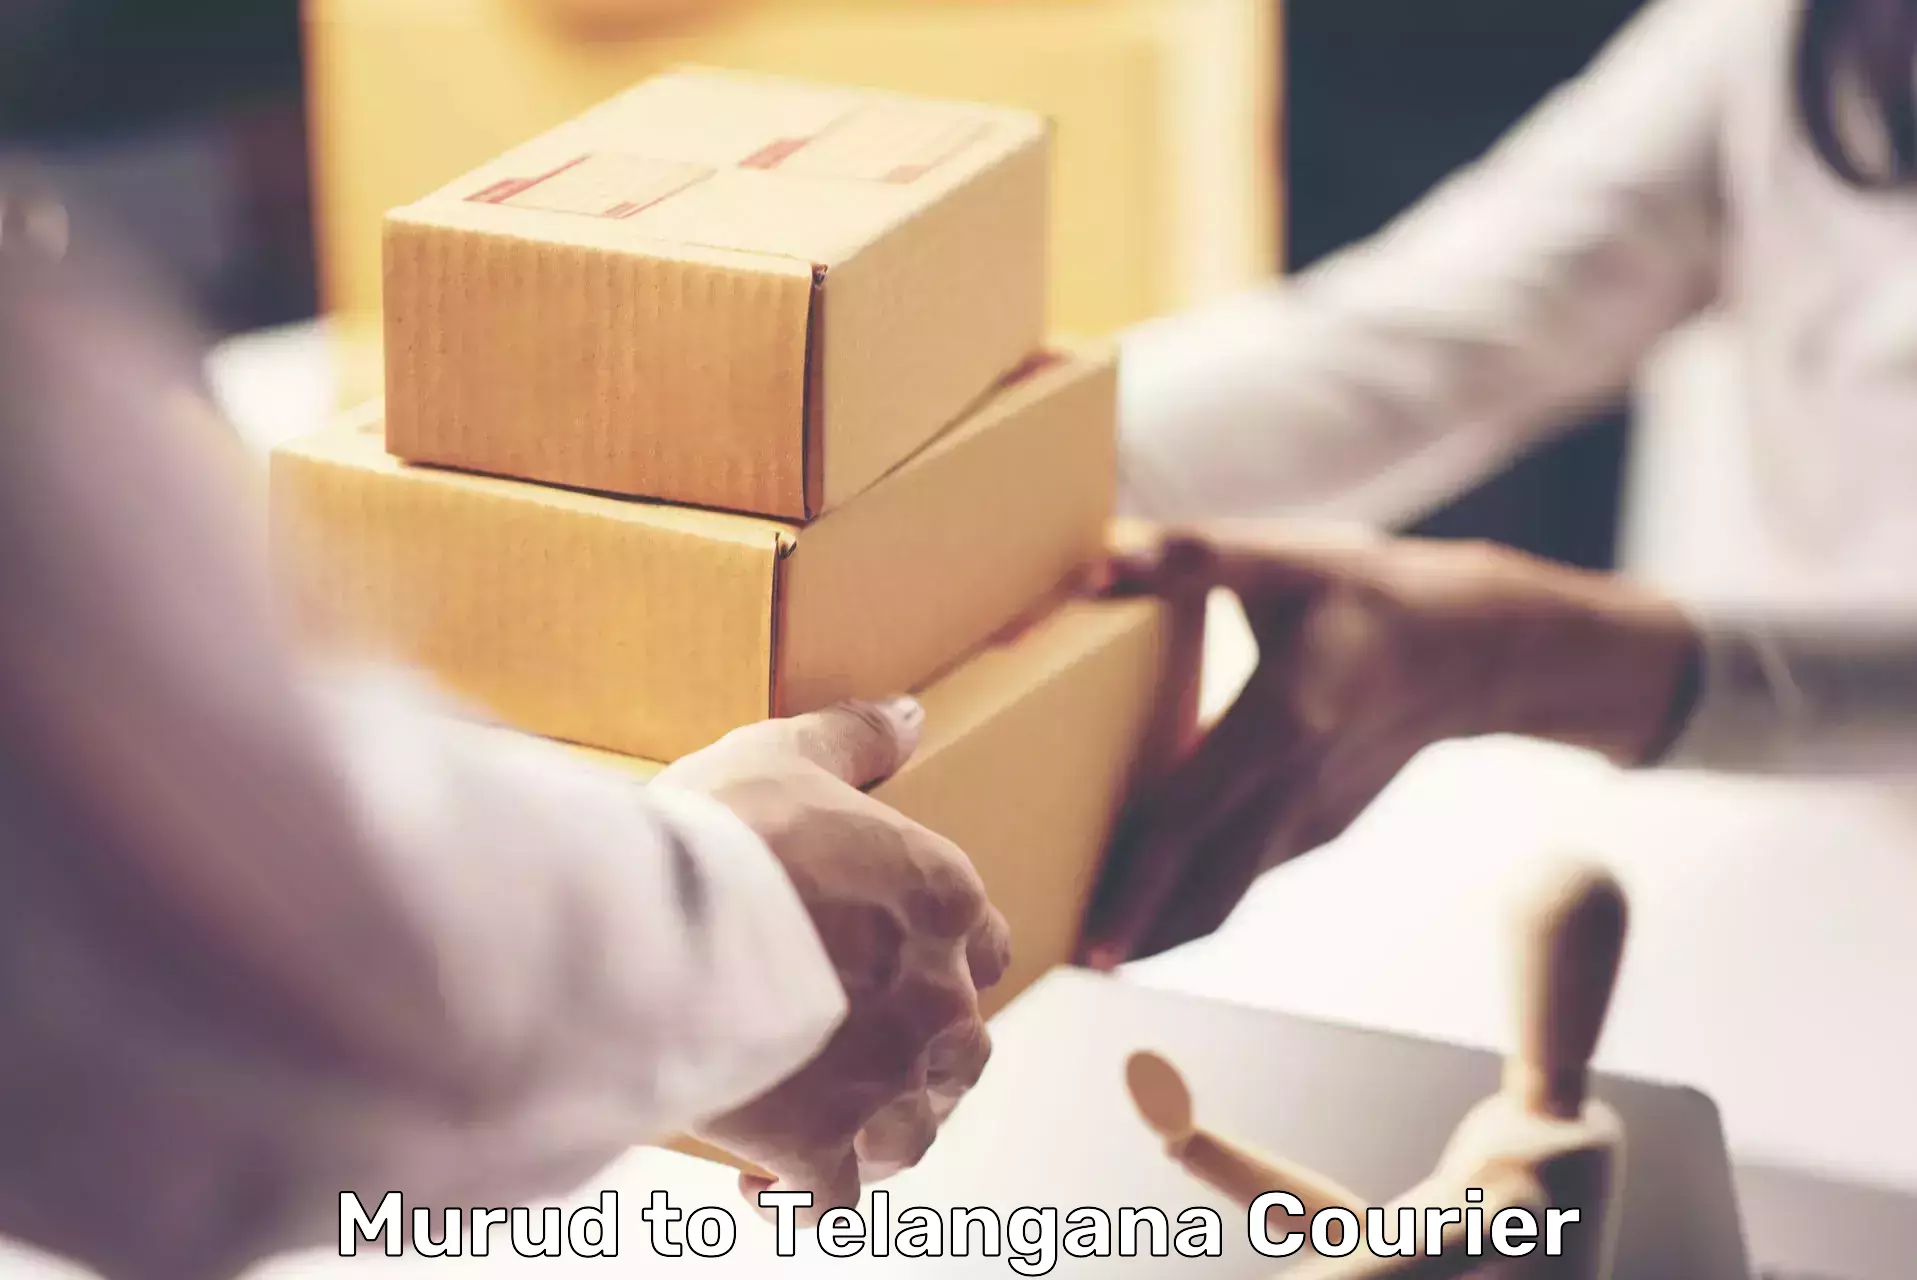 High-capacity parcel service Murud to Rayaparthi